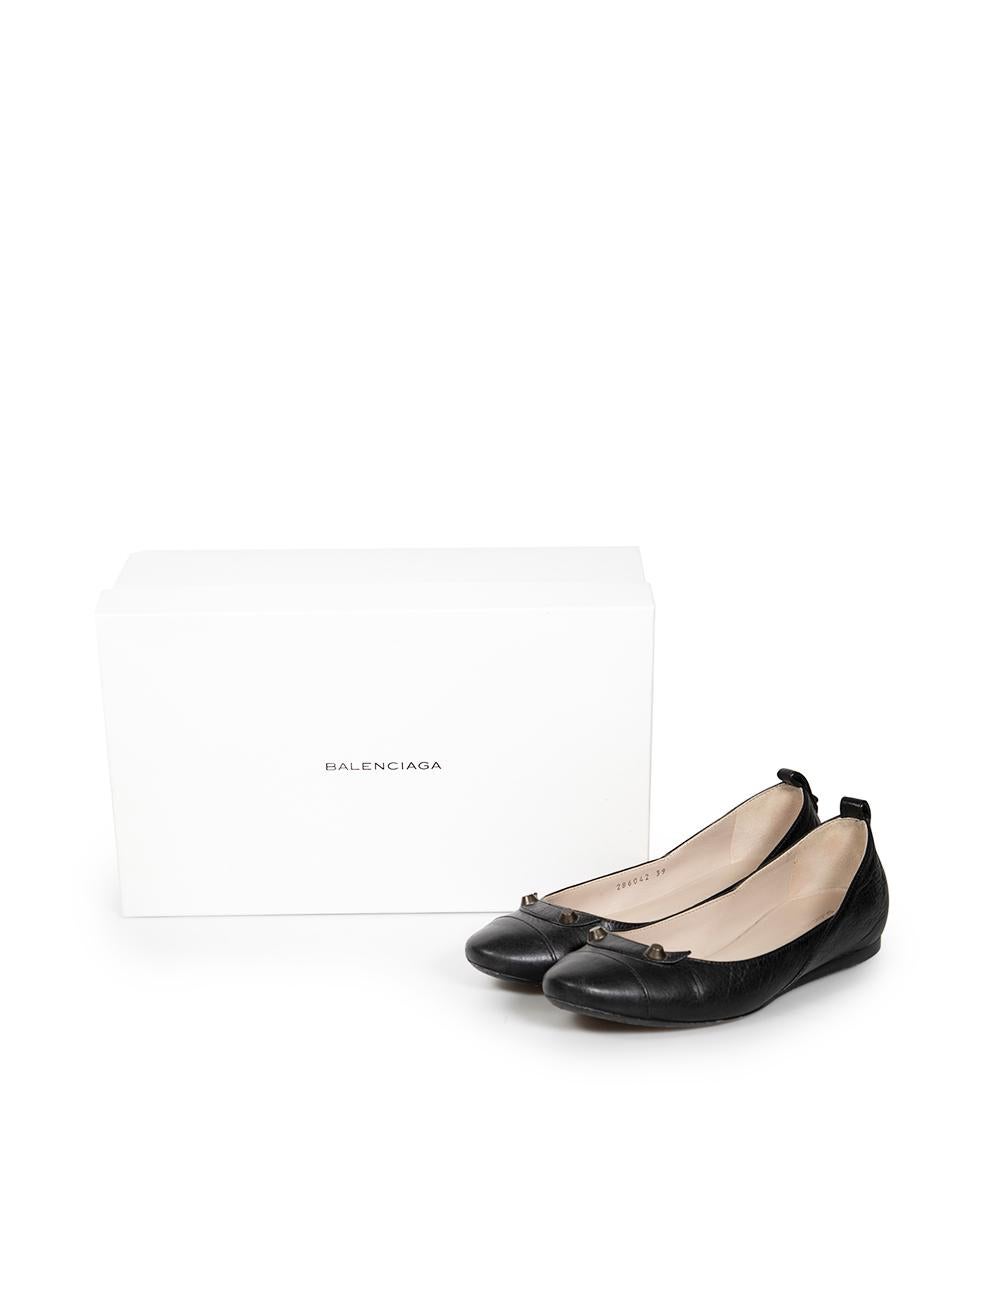 Balenciaga Black Leather Stud Detail Ballet Flats Size IT 39 For Sale 4